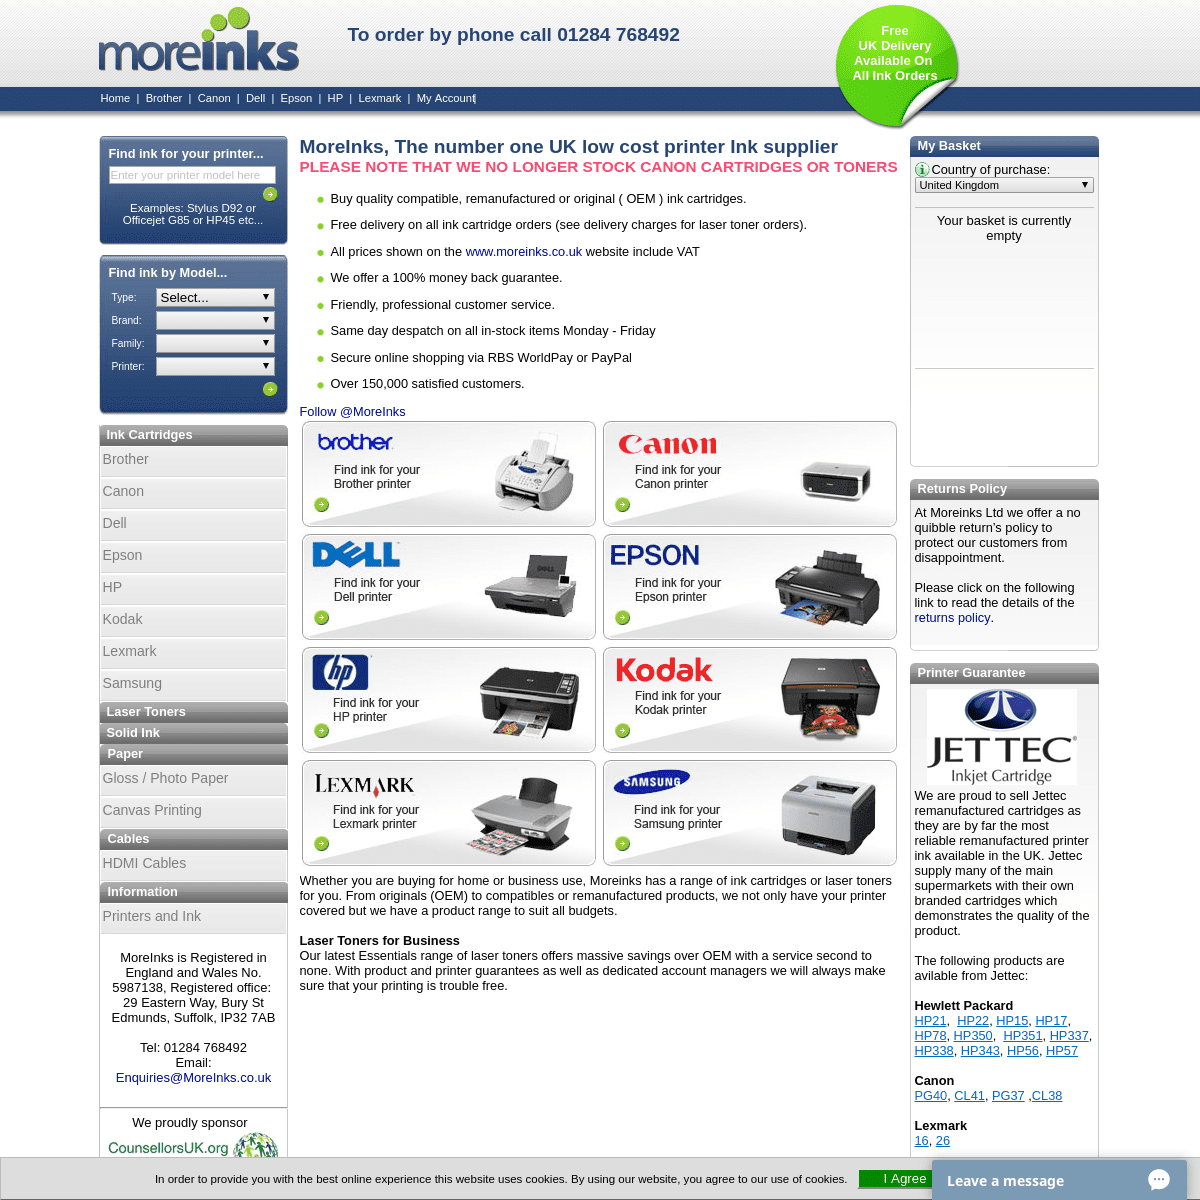 A complete backup of moreinks.co.uk